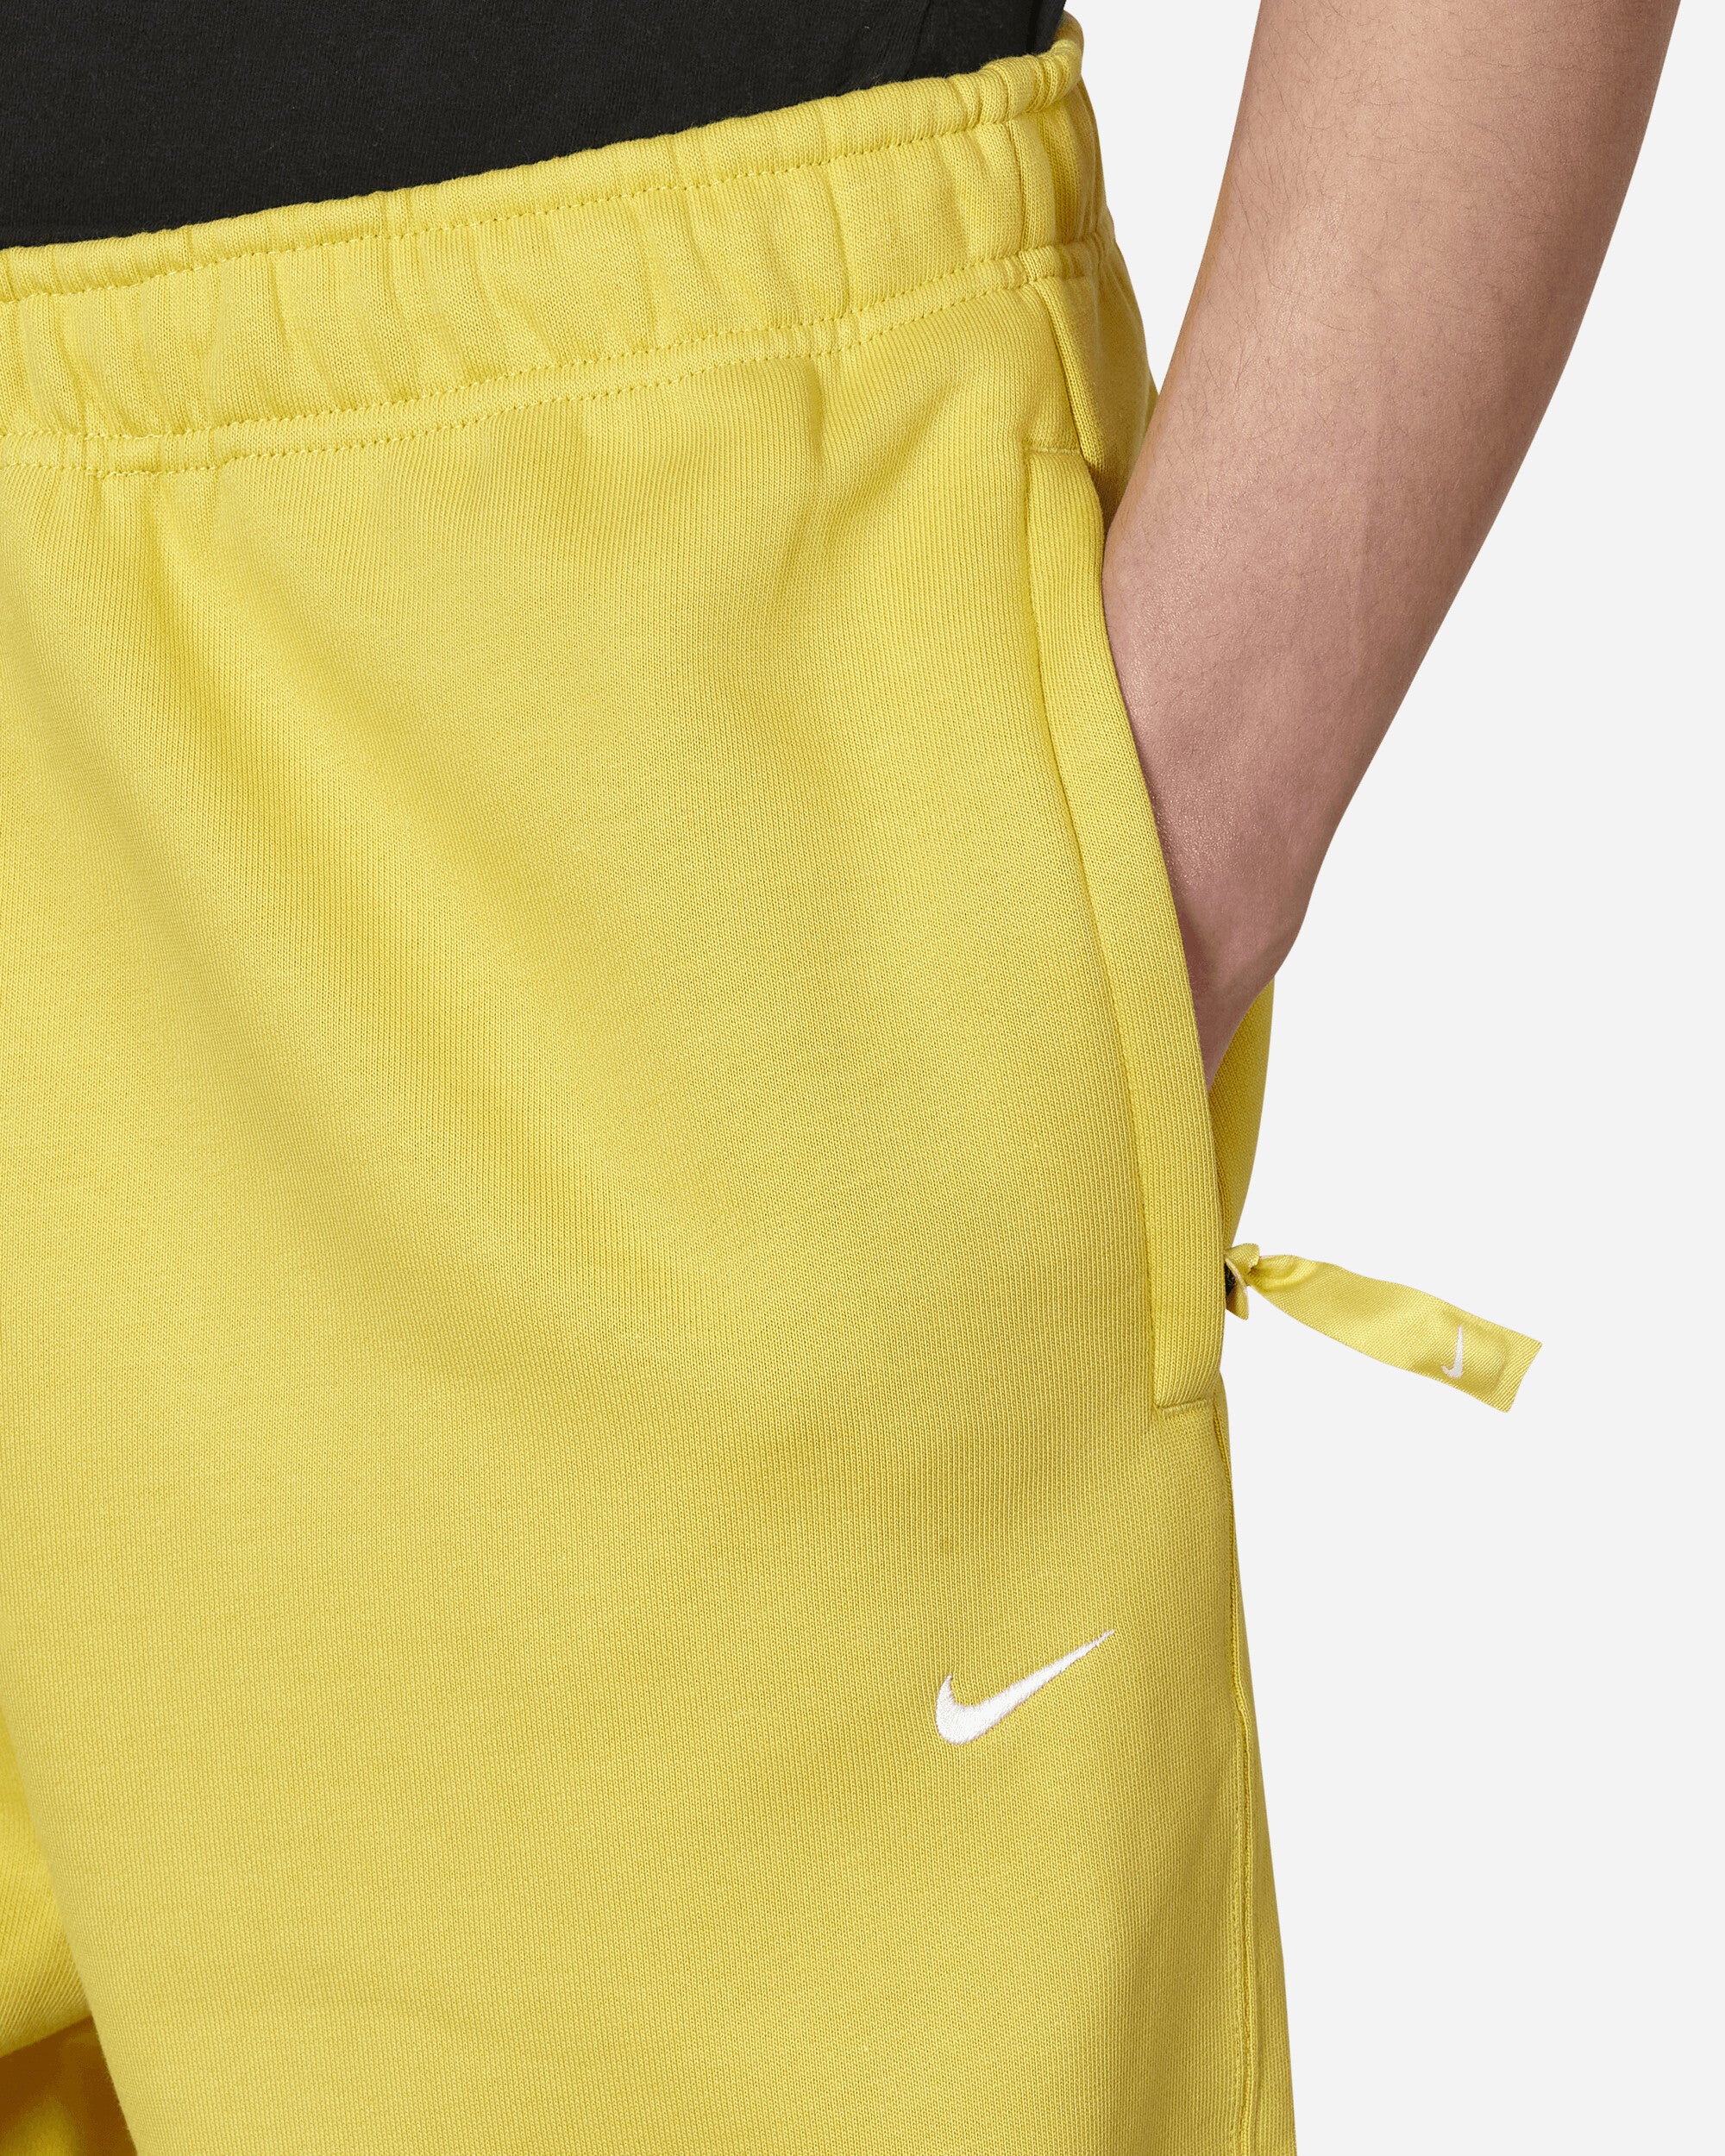 Nike Solo Swsh Flc Cf Pant Saturn Gold/White Pants Sweatpants DX1364-700